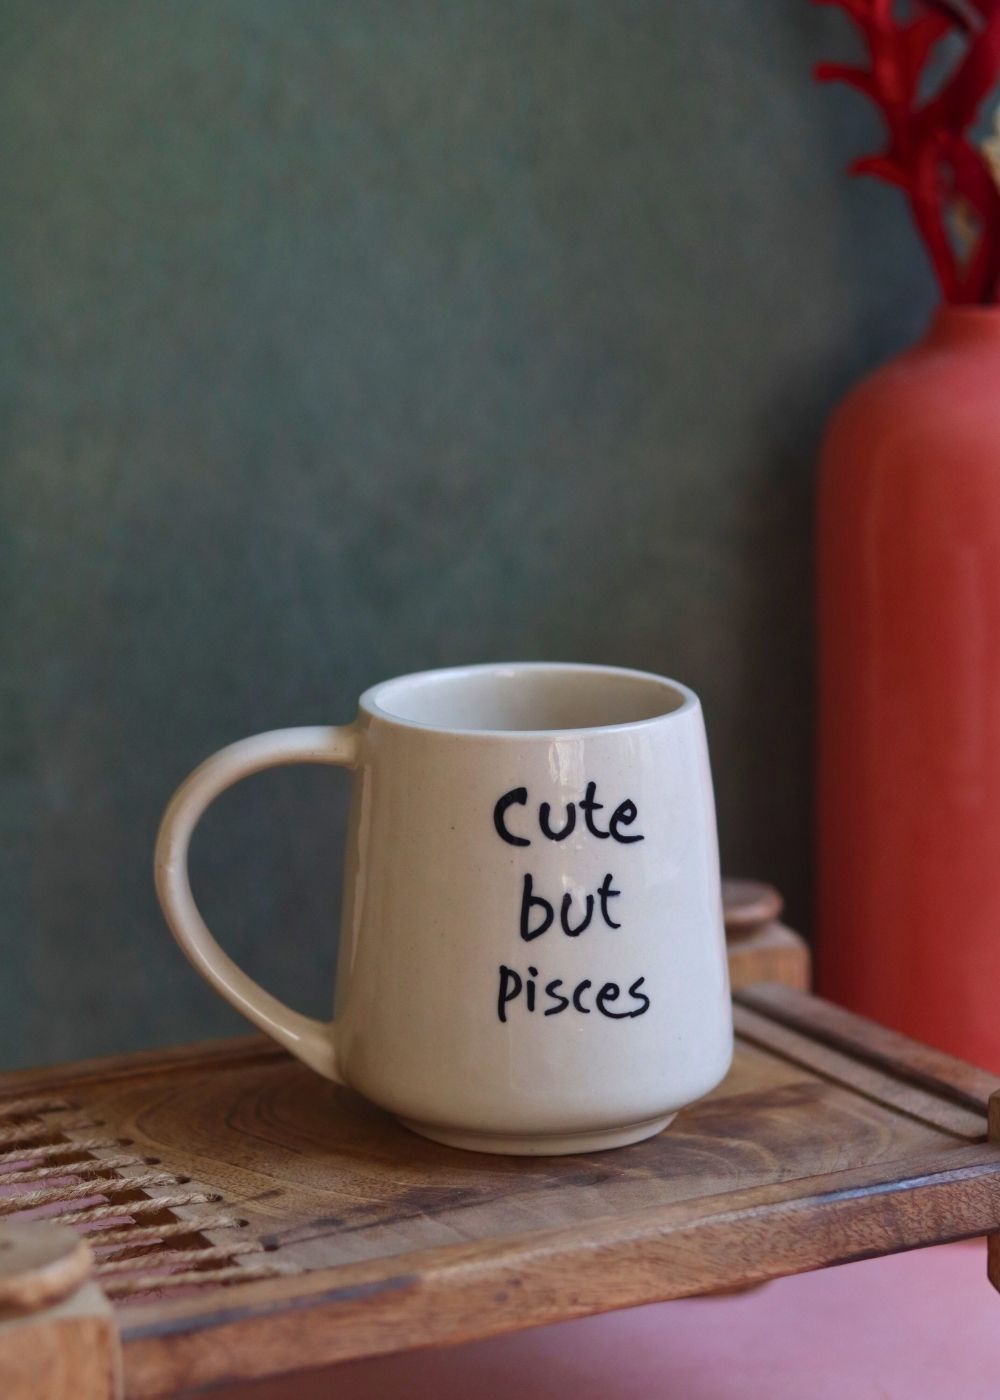 cute but pisces mug made by ceramic 